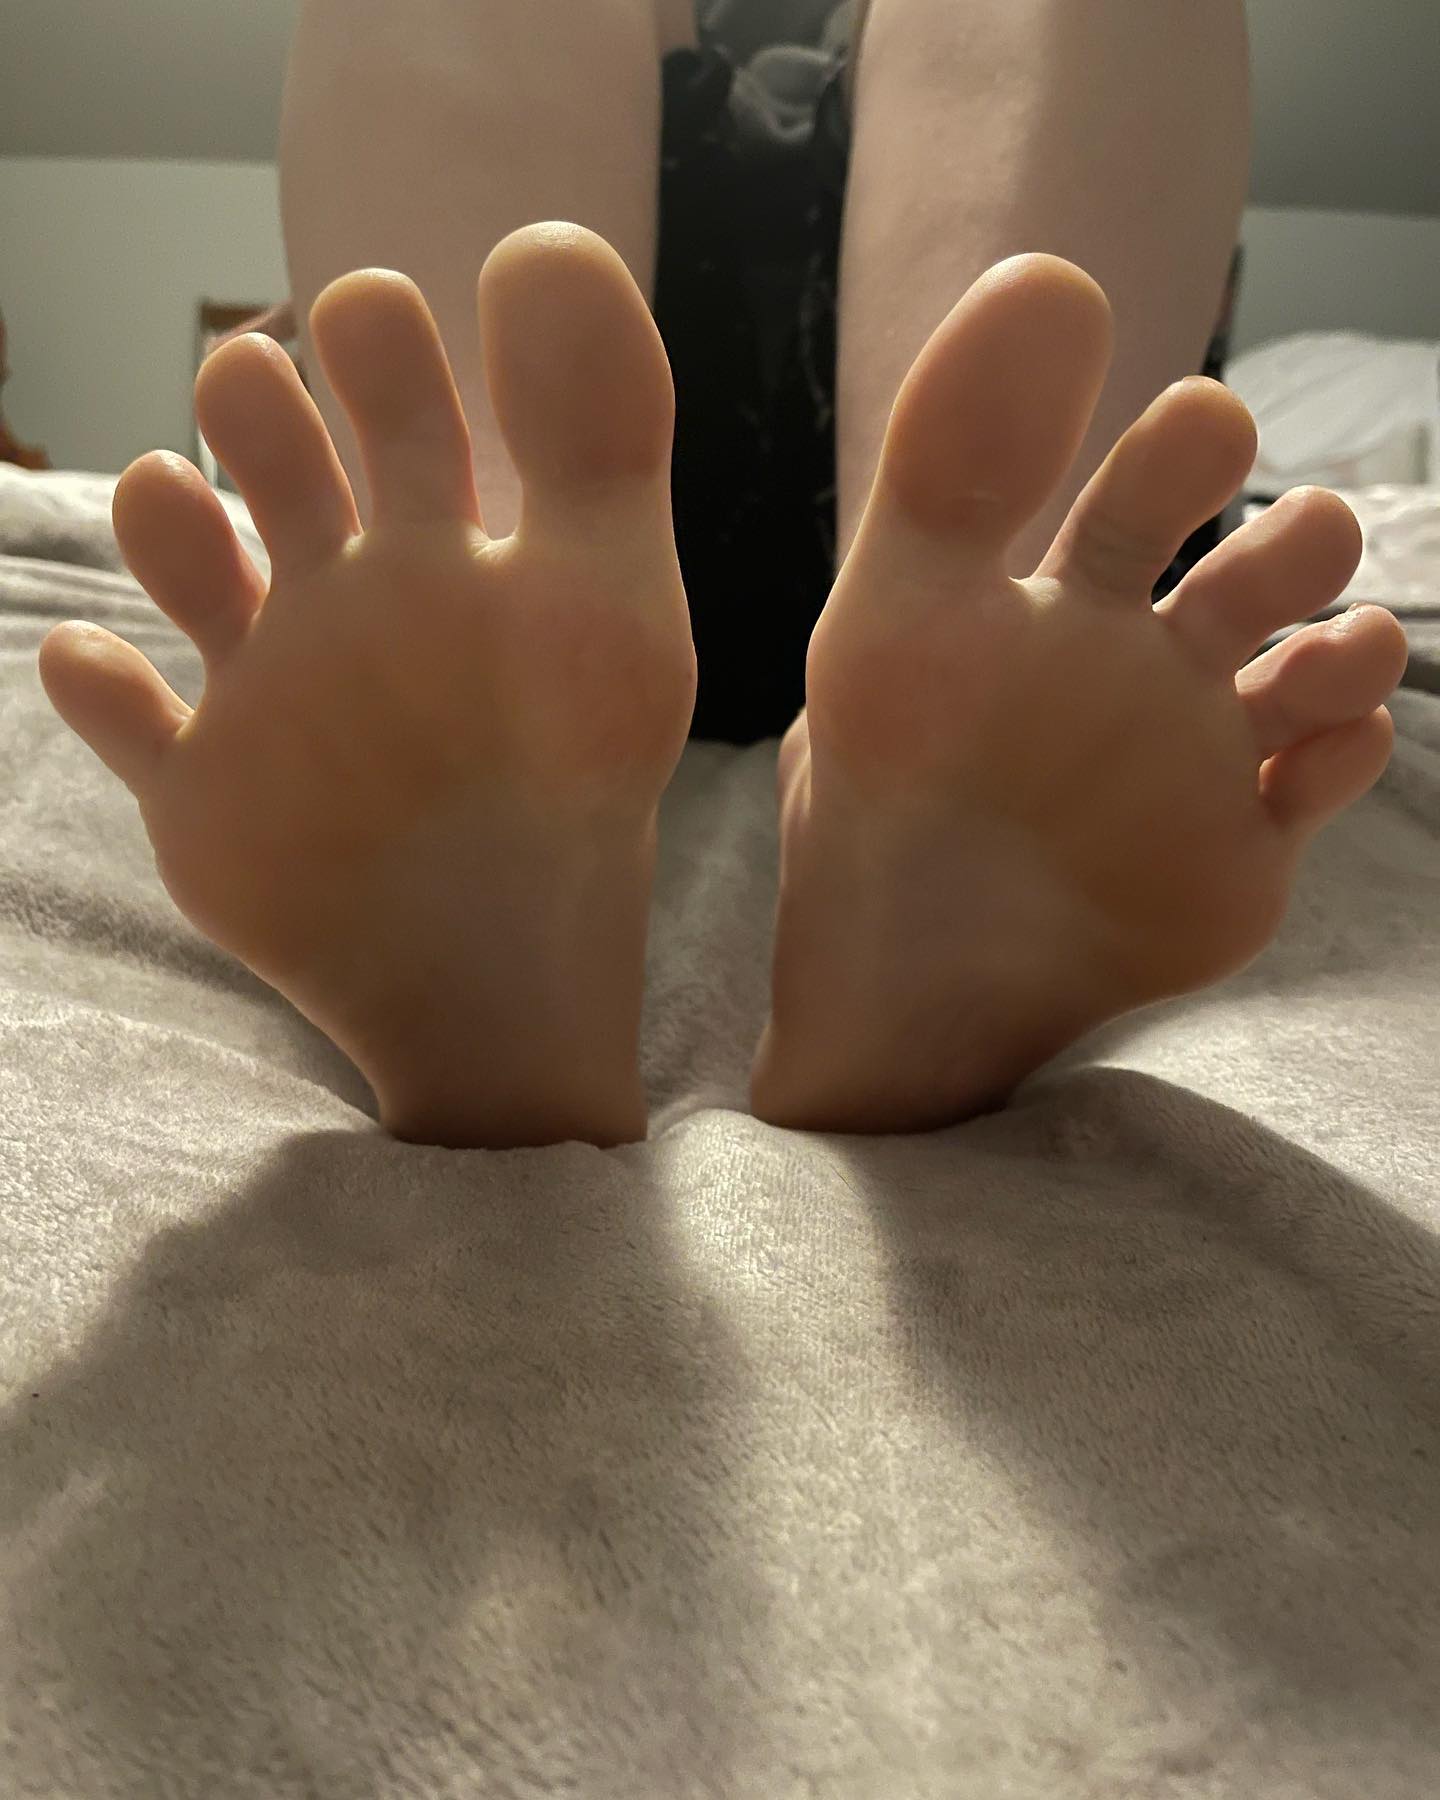 Perfect soles😍
*
*
*

#feet #toes #foot #footfetishnation #feetporn #soles #feetlovers #feetpics #feetworship #footfetish #feetfetishworld #prettyfeet #instafeet #legs #barefeet #feetmodel #prettytoes #footmodel #sexyfeet #cutefeet #barefoot #footfetishcommunity #pies #footporn #beautifulfeet #feetstagram #footgoddess #heels #solesfetish #p